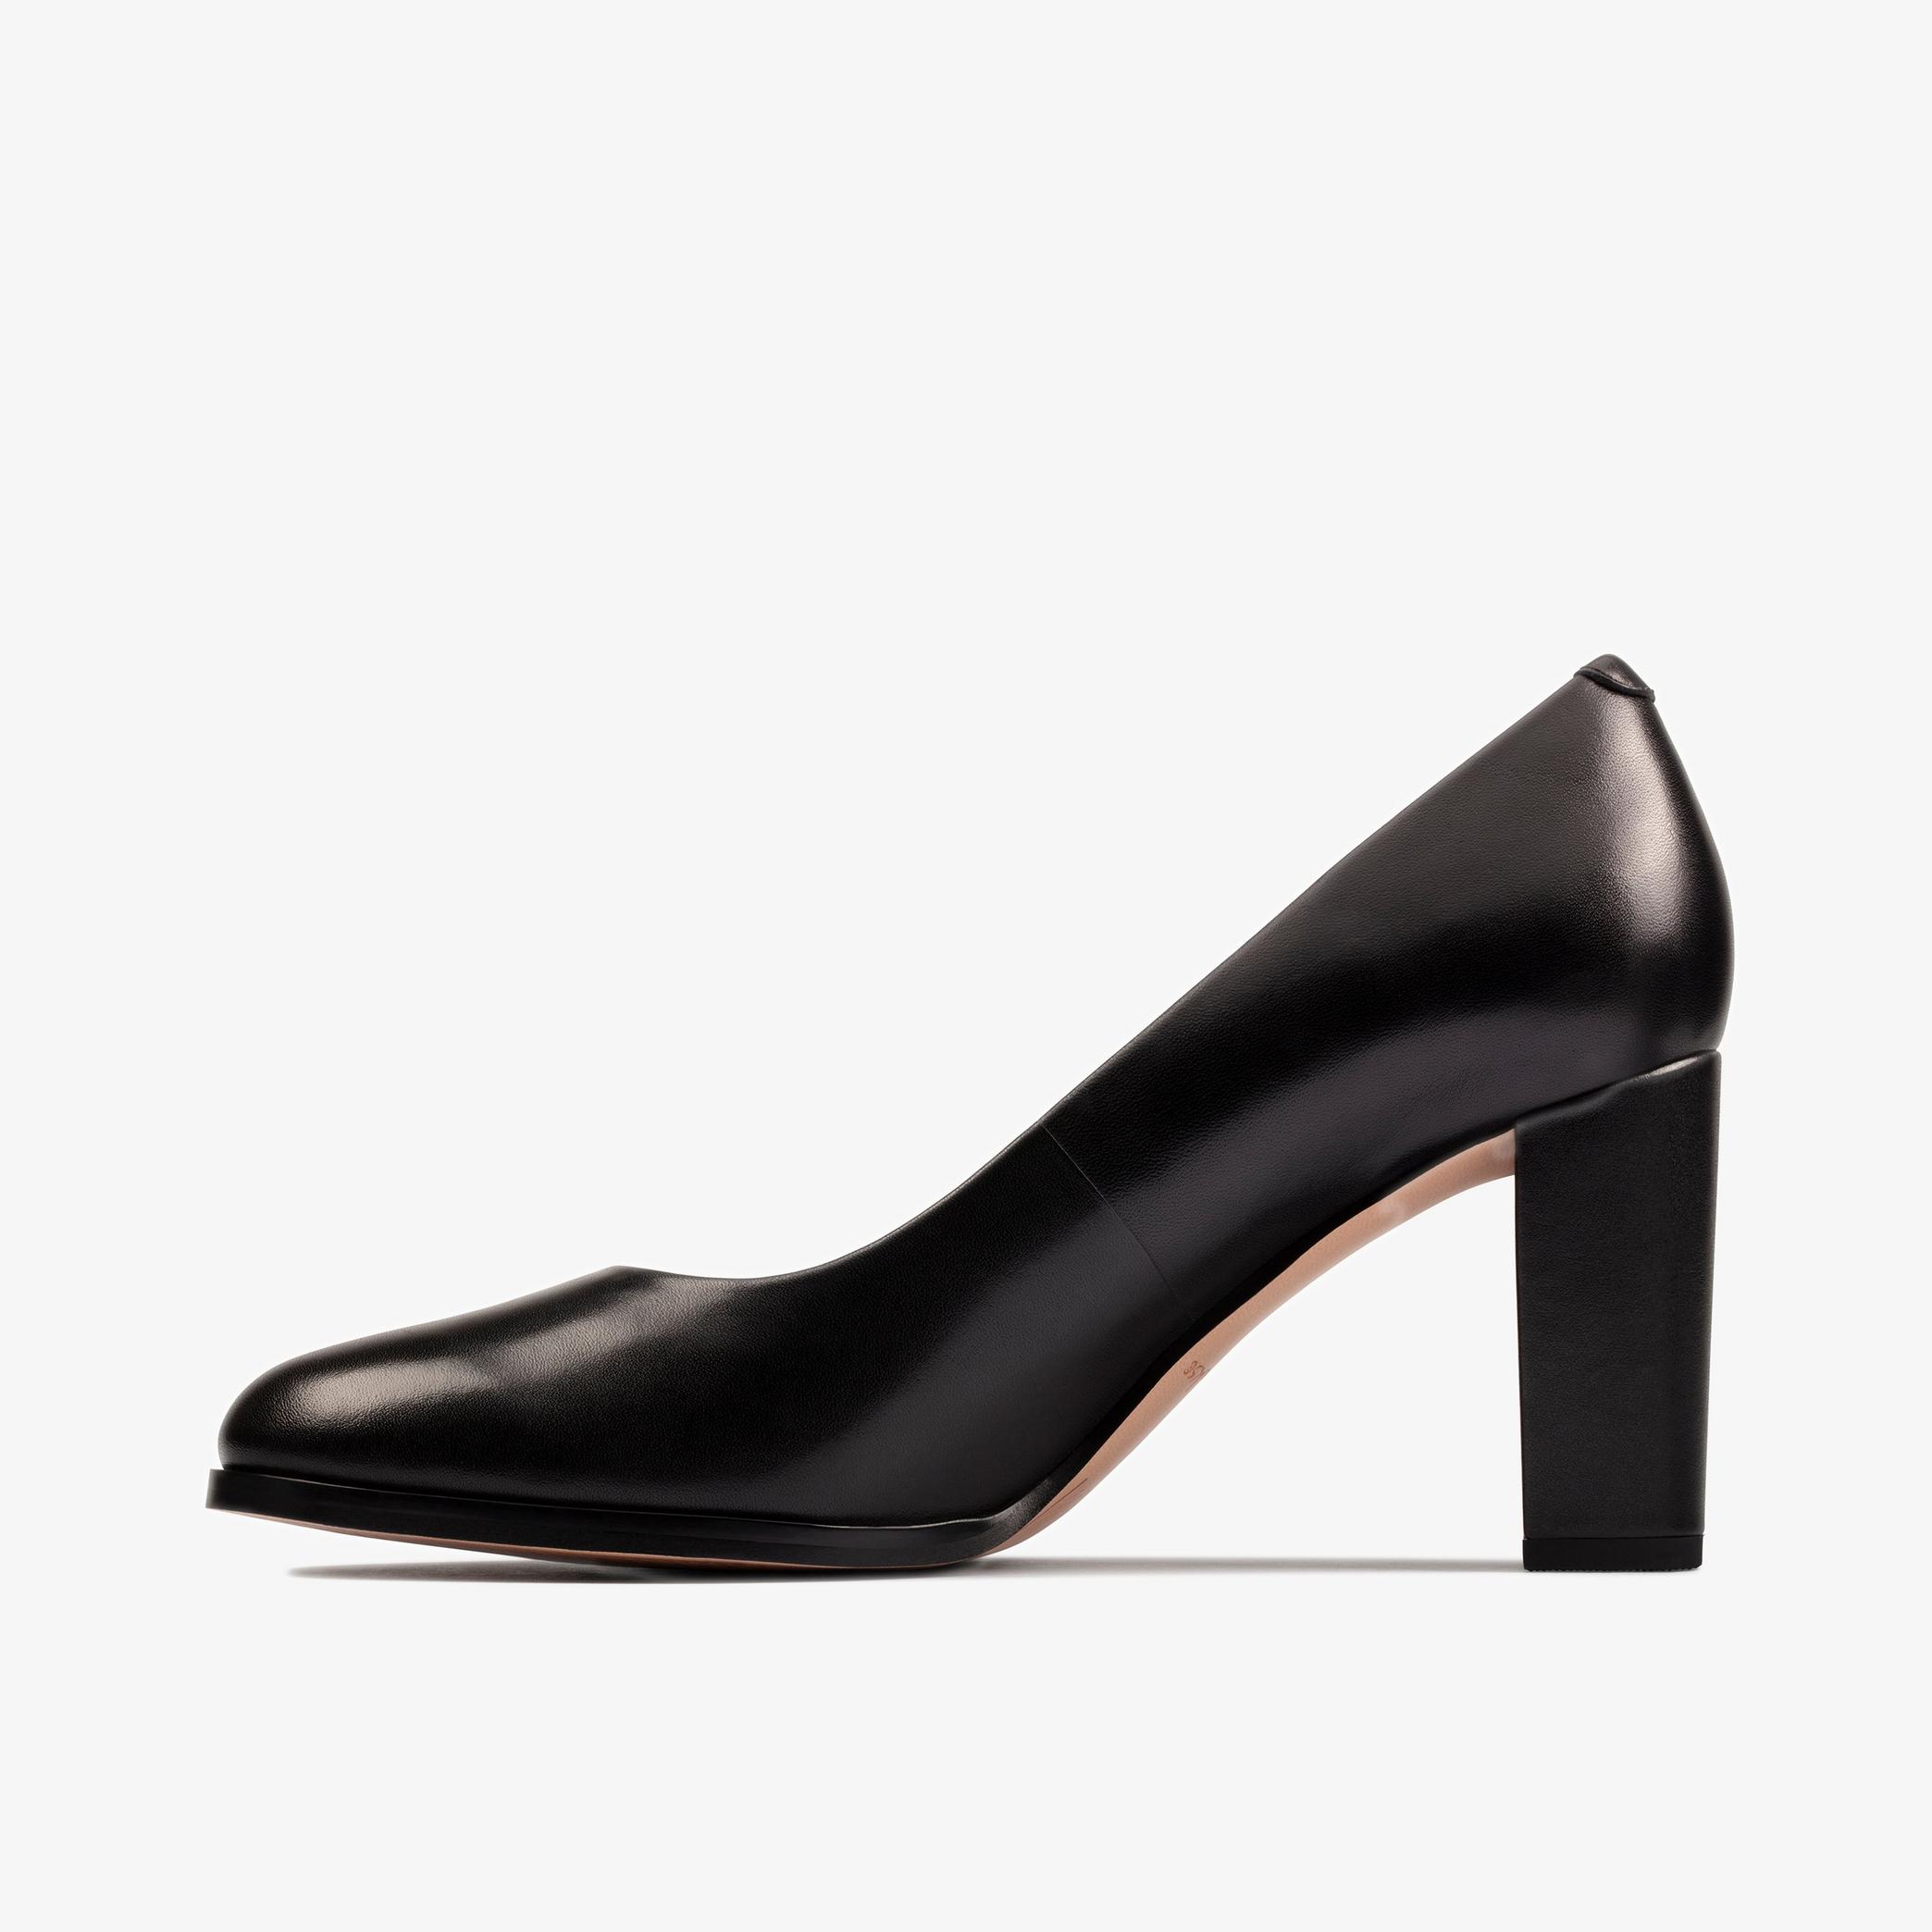 Kaylin Cara 2 Black Leather High Heels, view 2 of 6